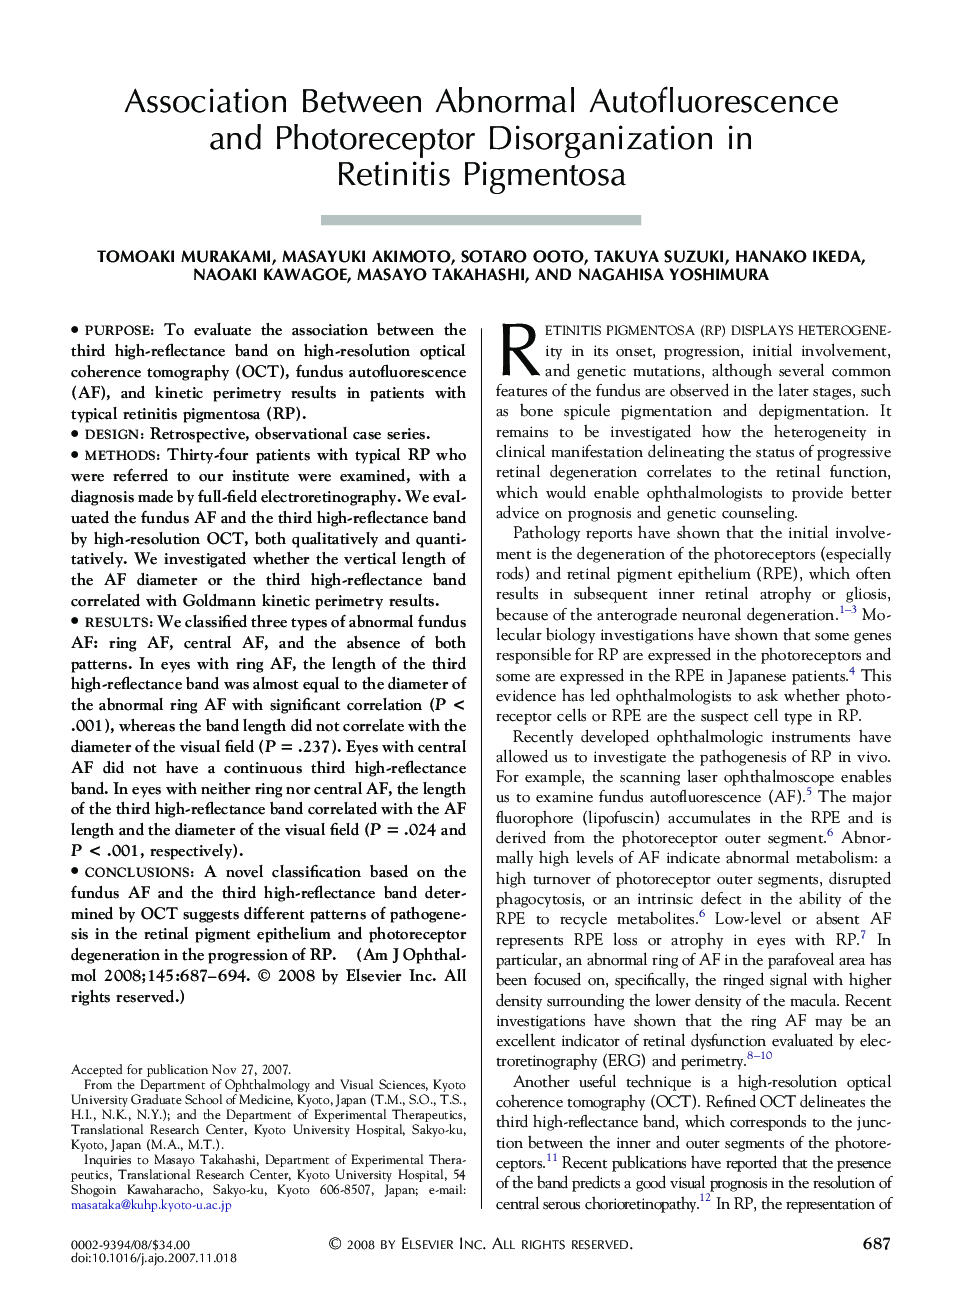 Association Between Abnormal Autofluorescence and Photoreceptor Disorganization in Retinitis Pigmentosa